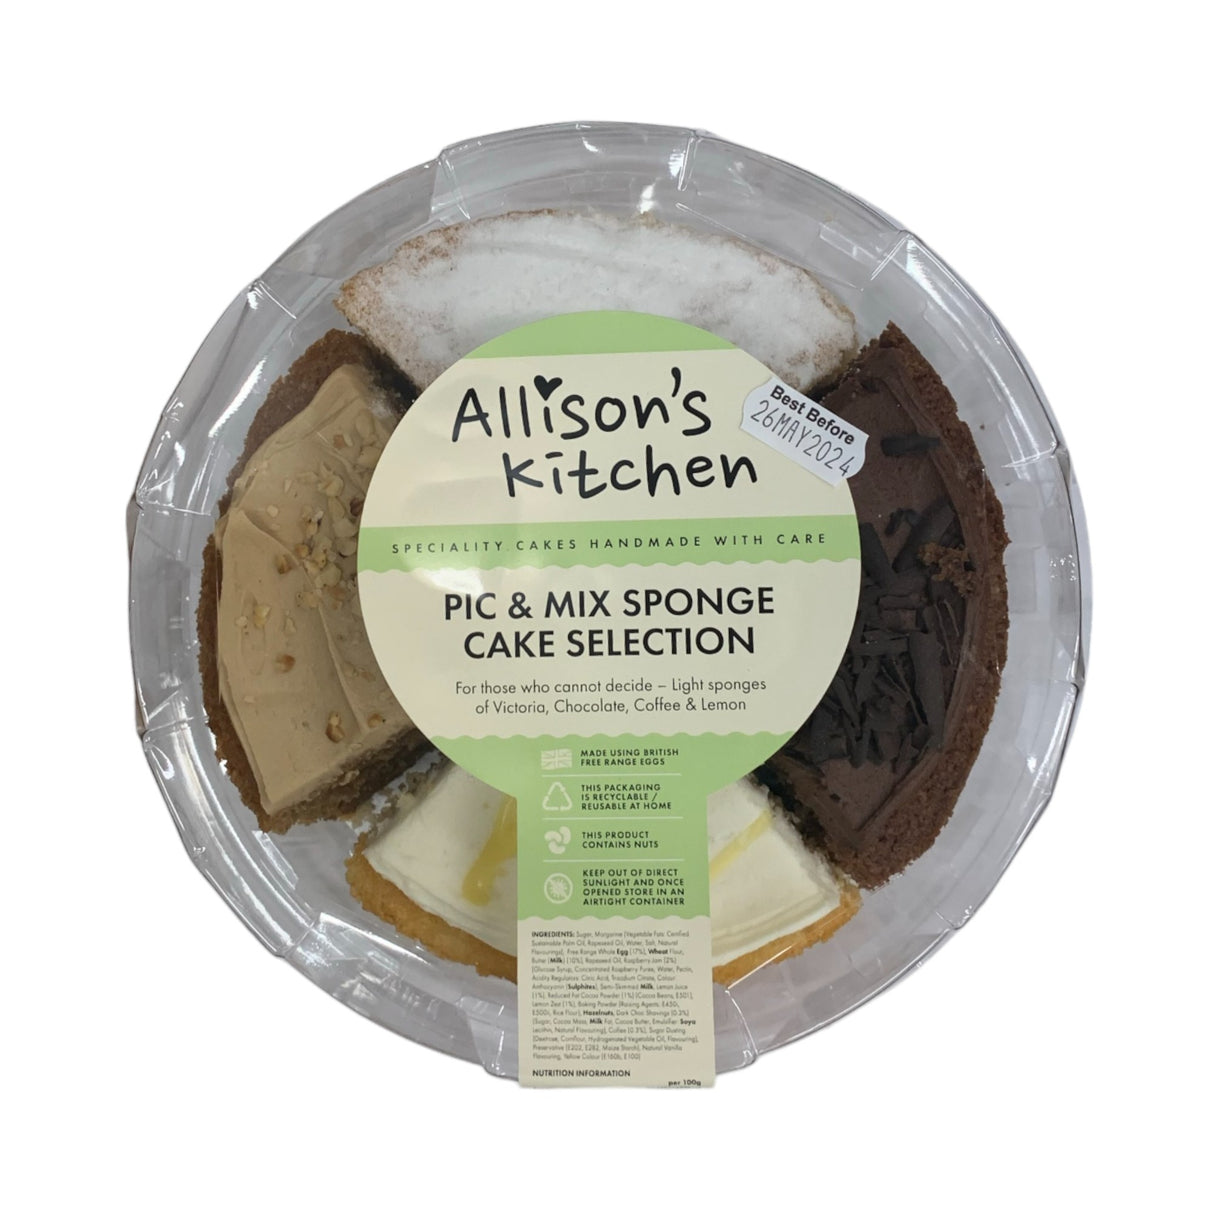 Allison's Kitchen Pic 'N' Mix Sponge Platter